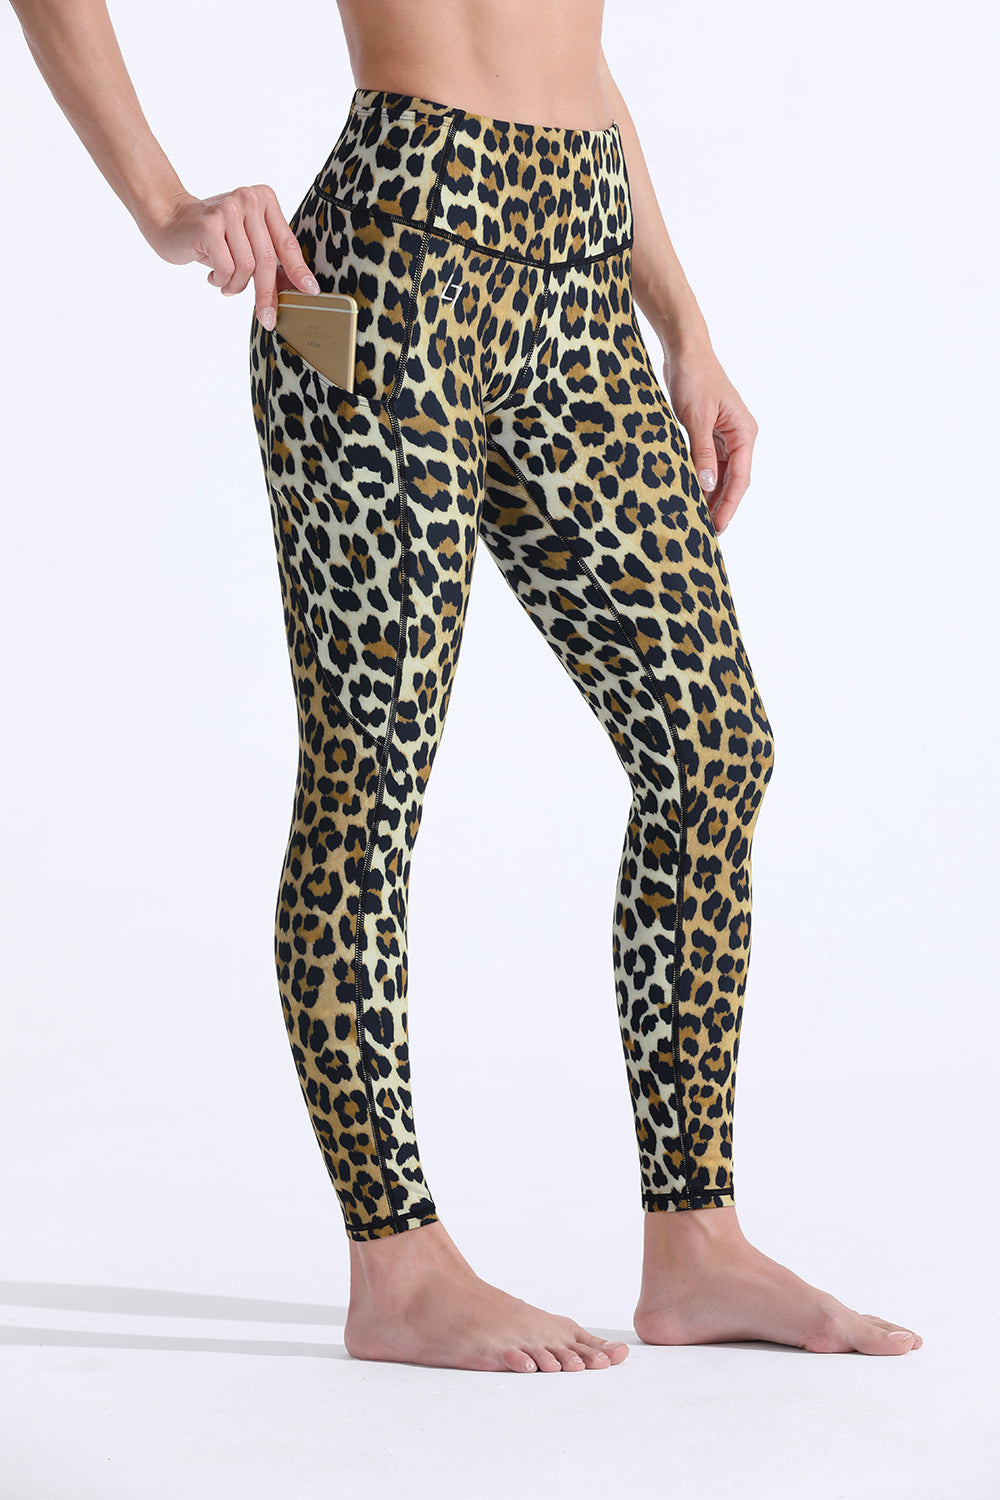 FITTIN Printed Yoga Leggings – Brown Leopard